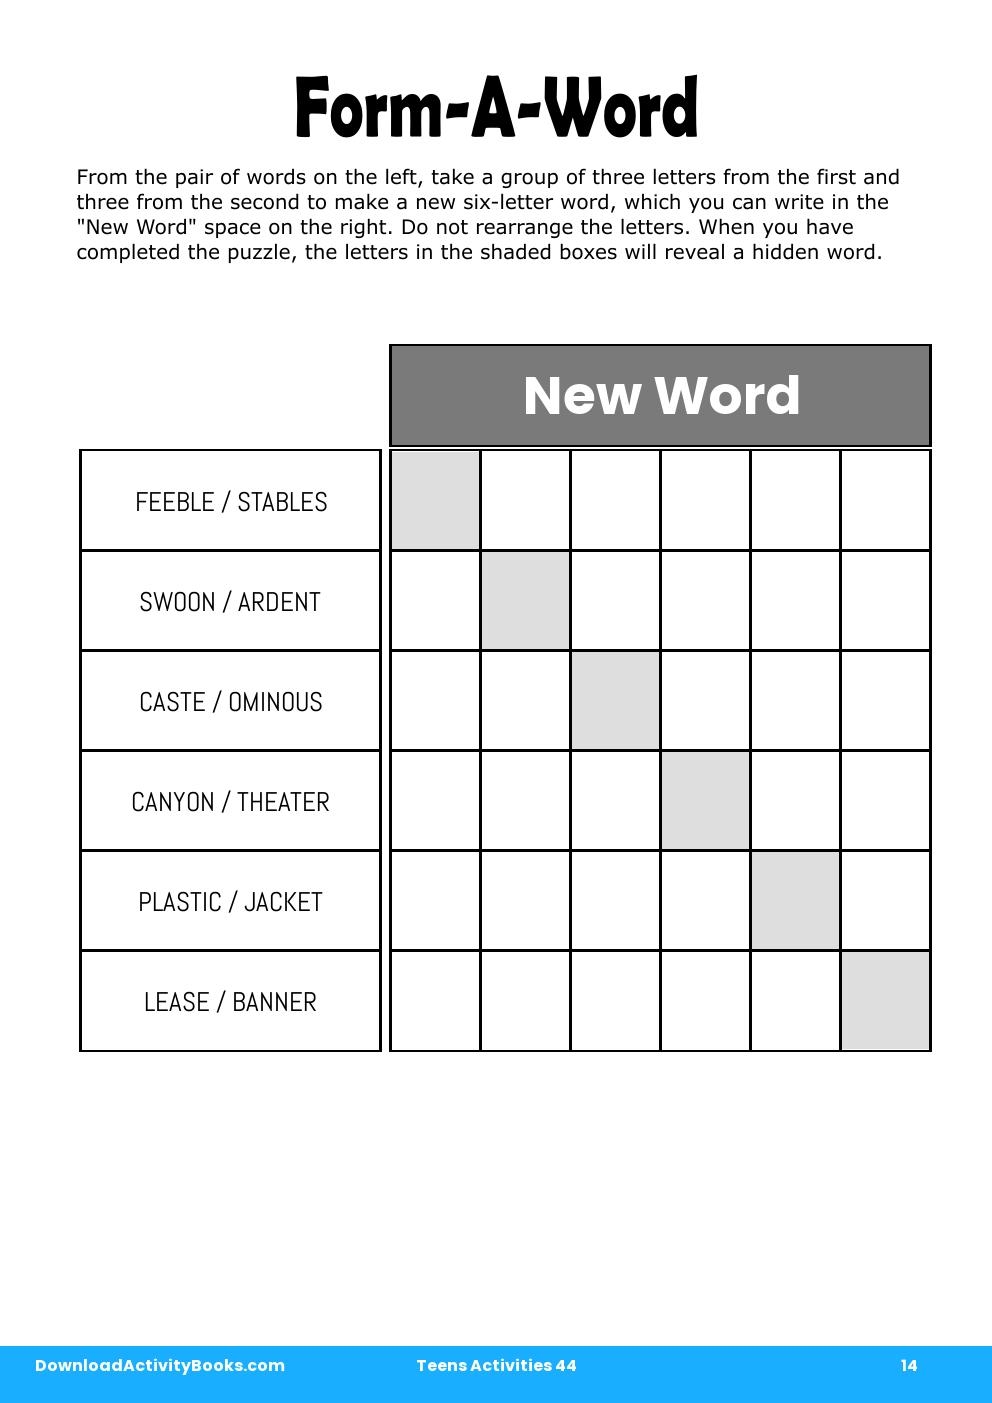 Form-A-Word in Teens Activities 44